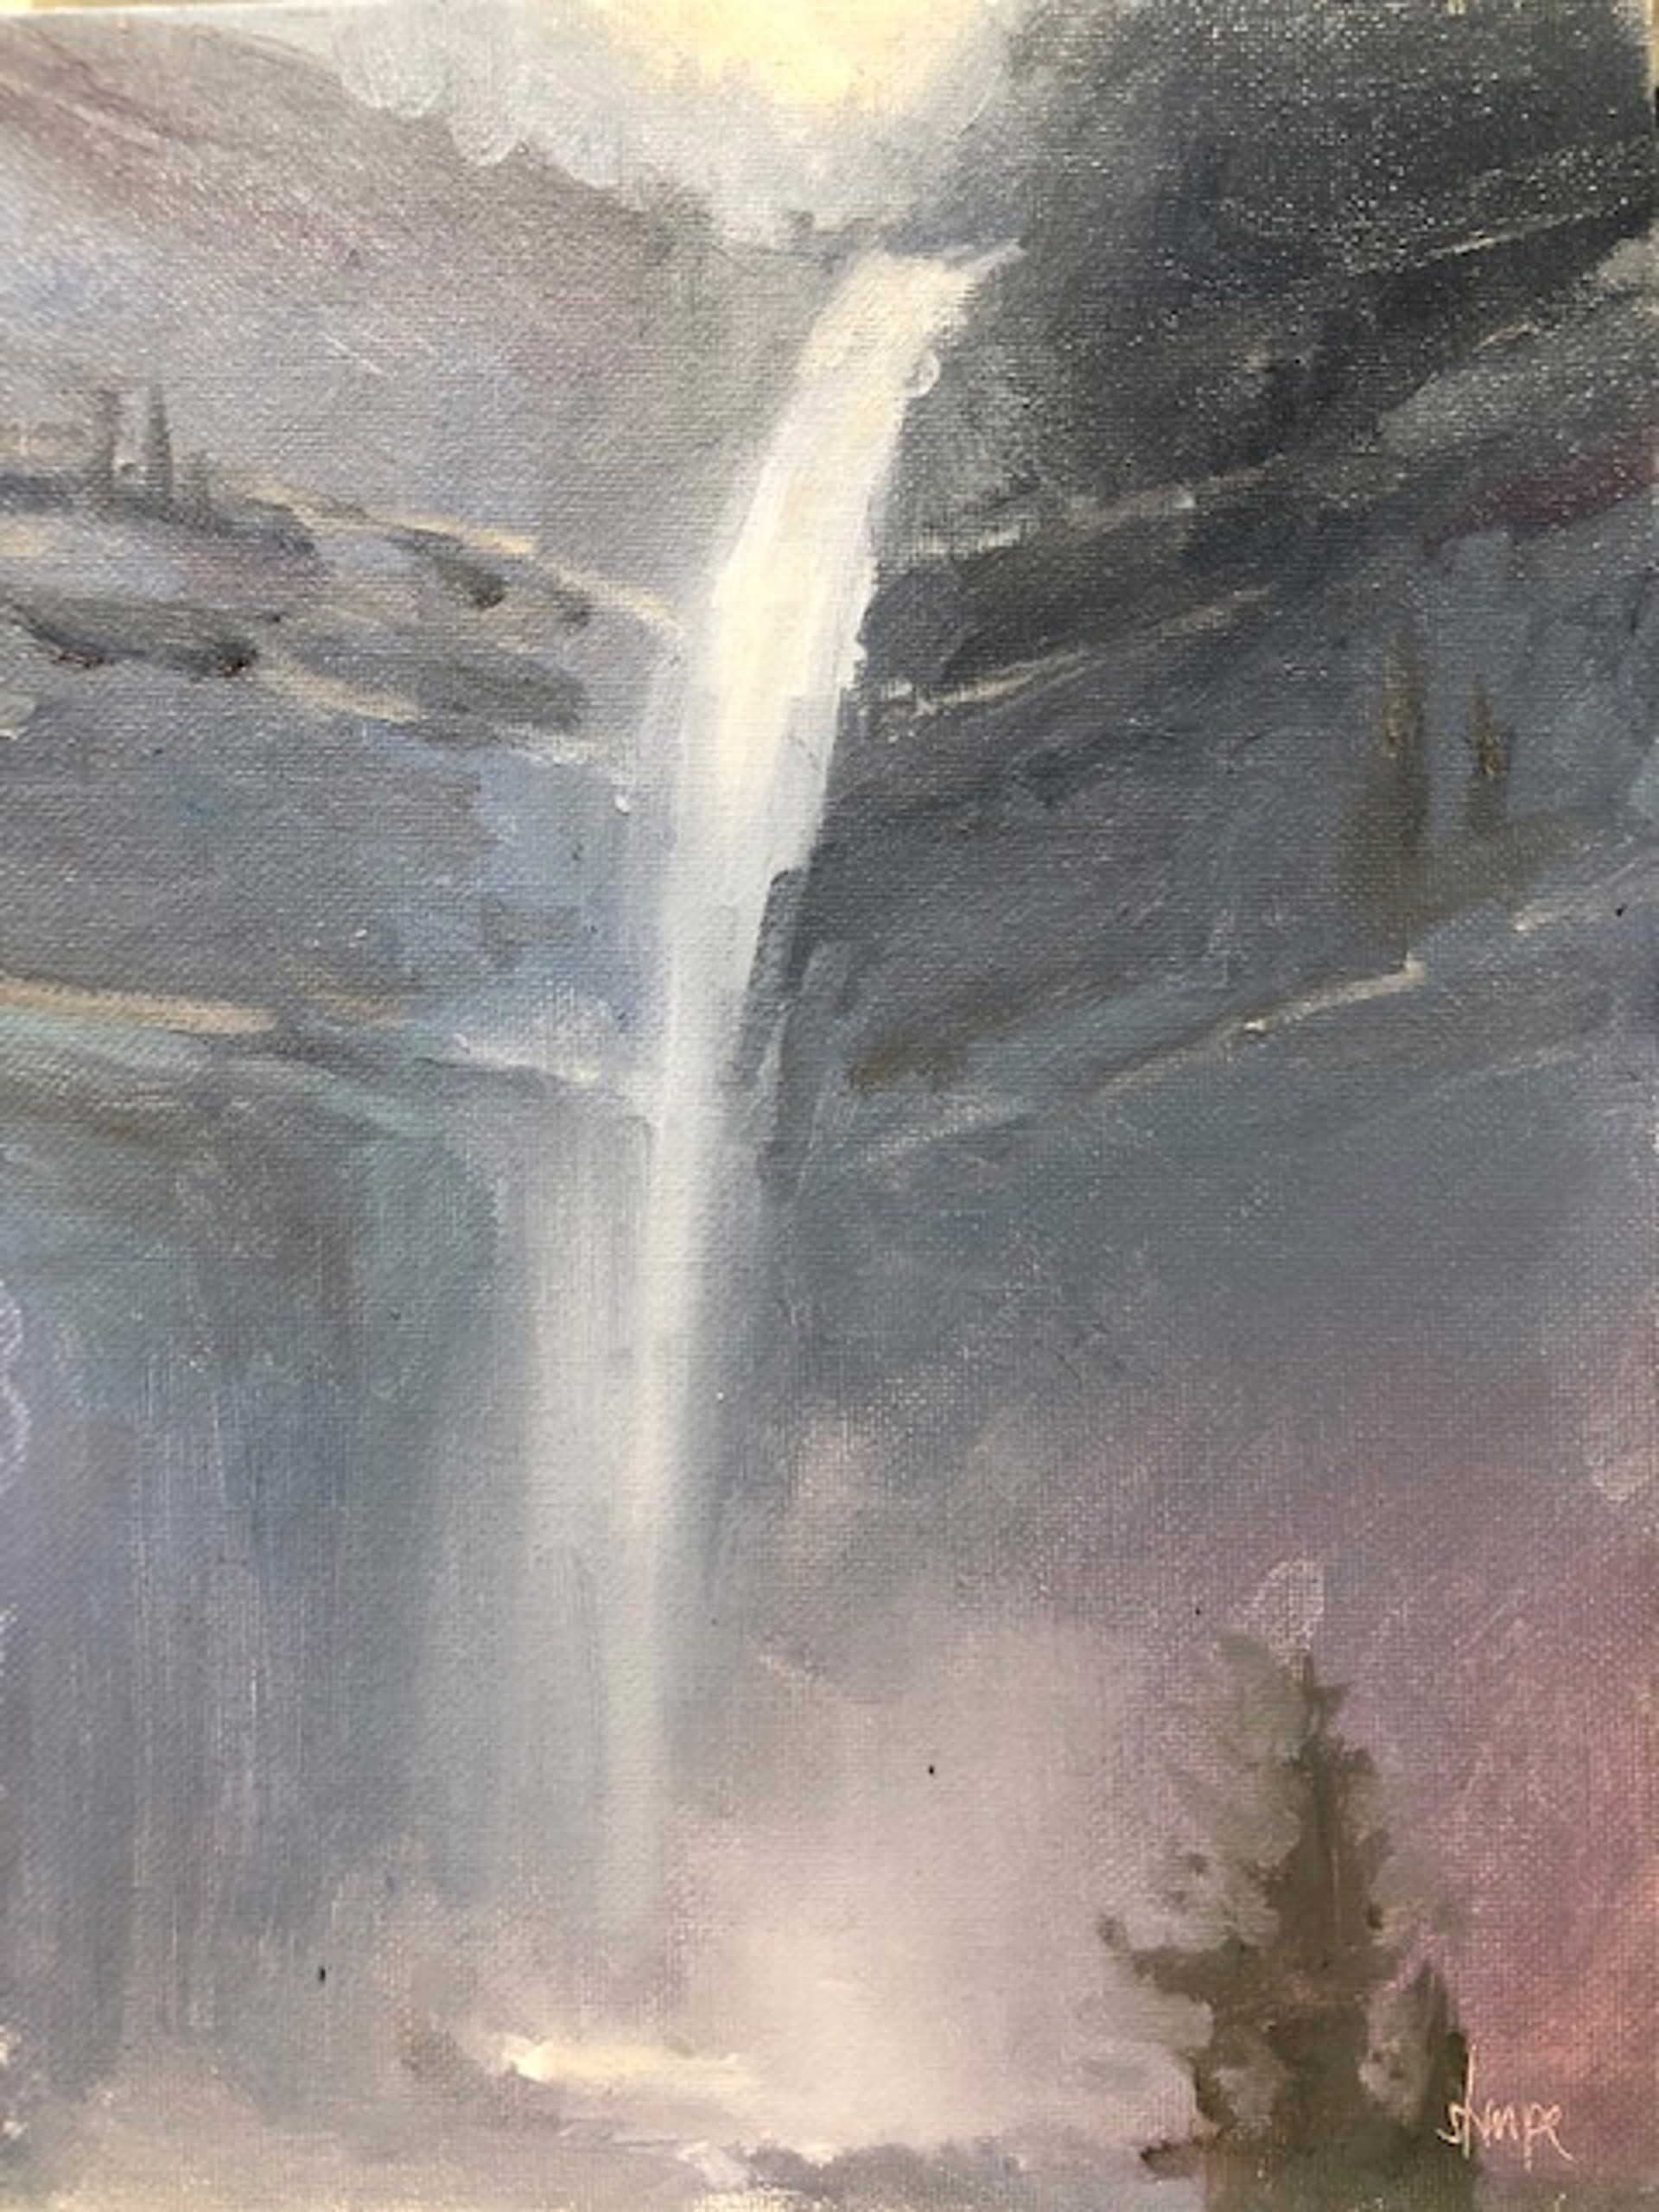 Takakka Falls by David Sharpe